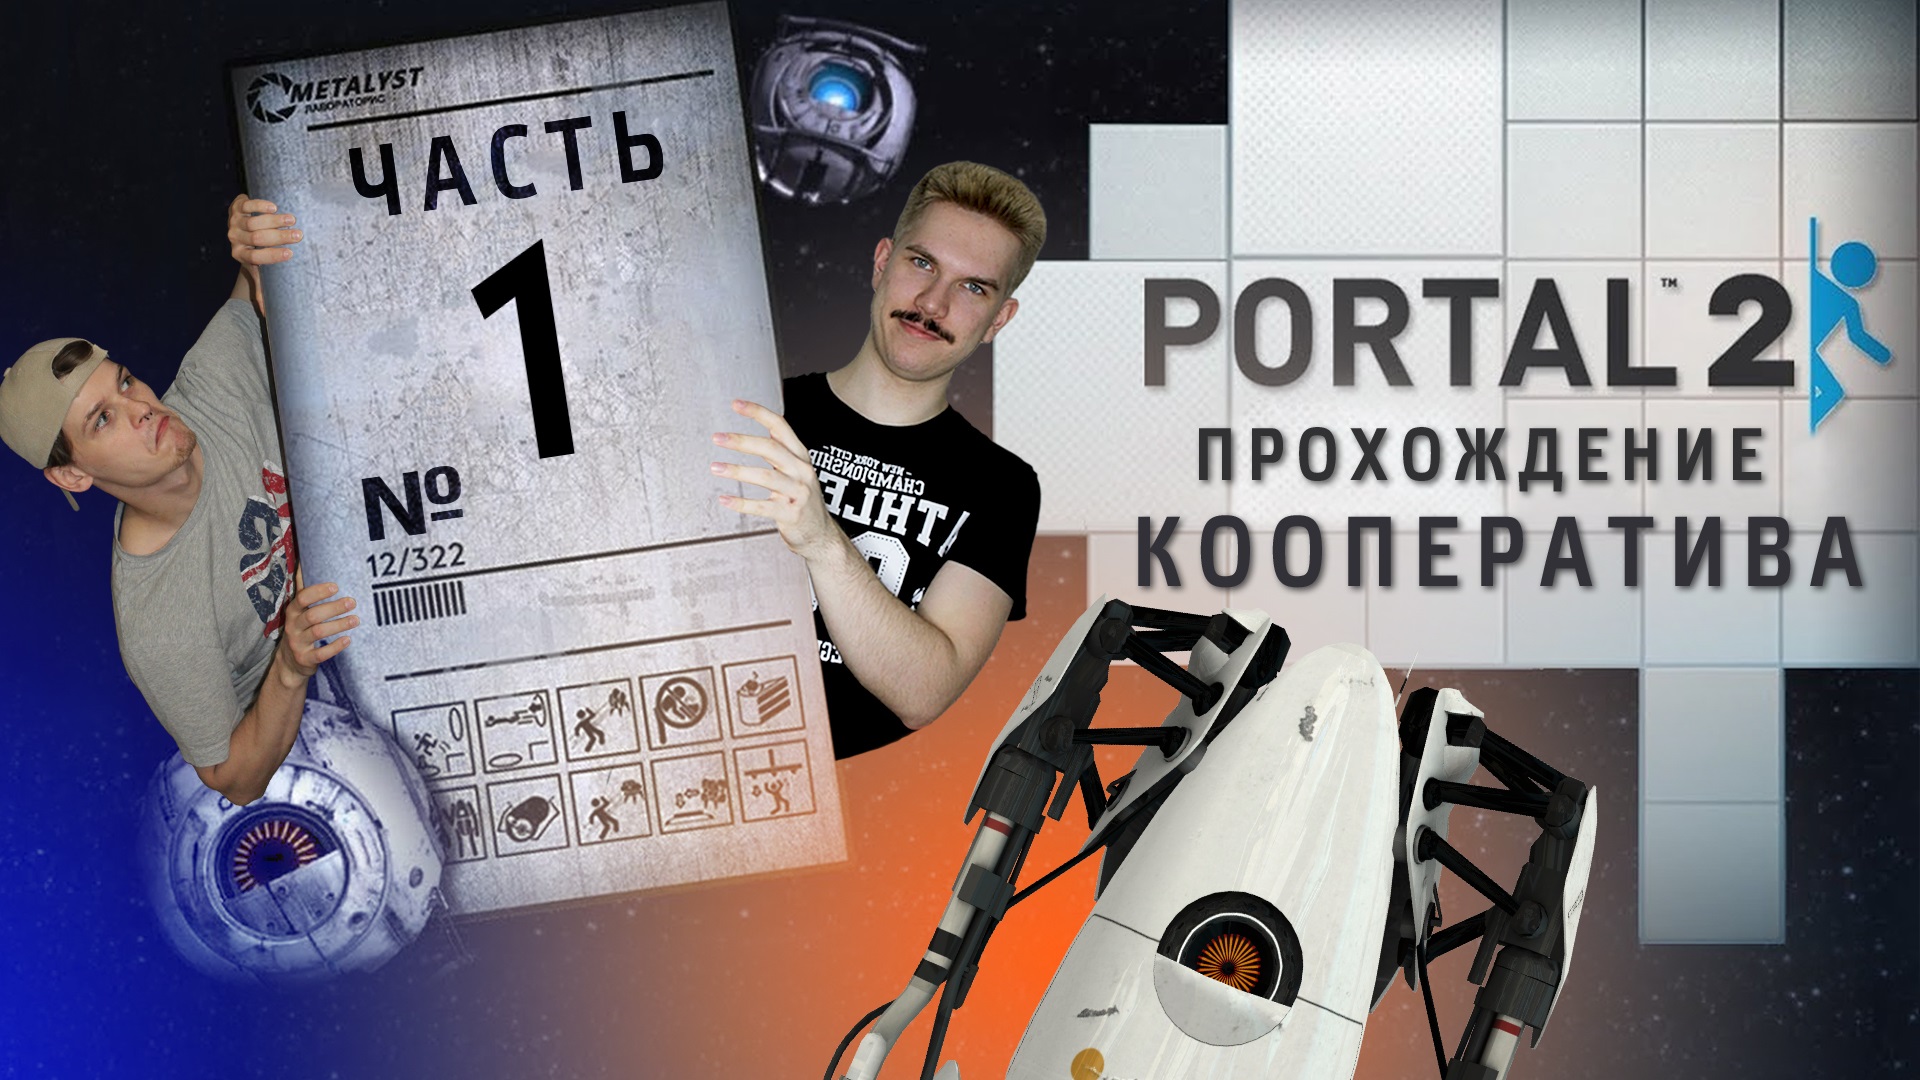 Portal 2 кооператив одному фото 42